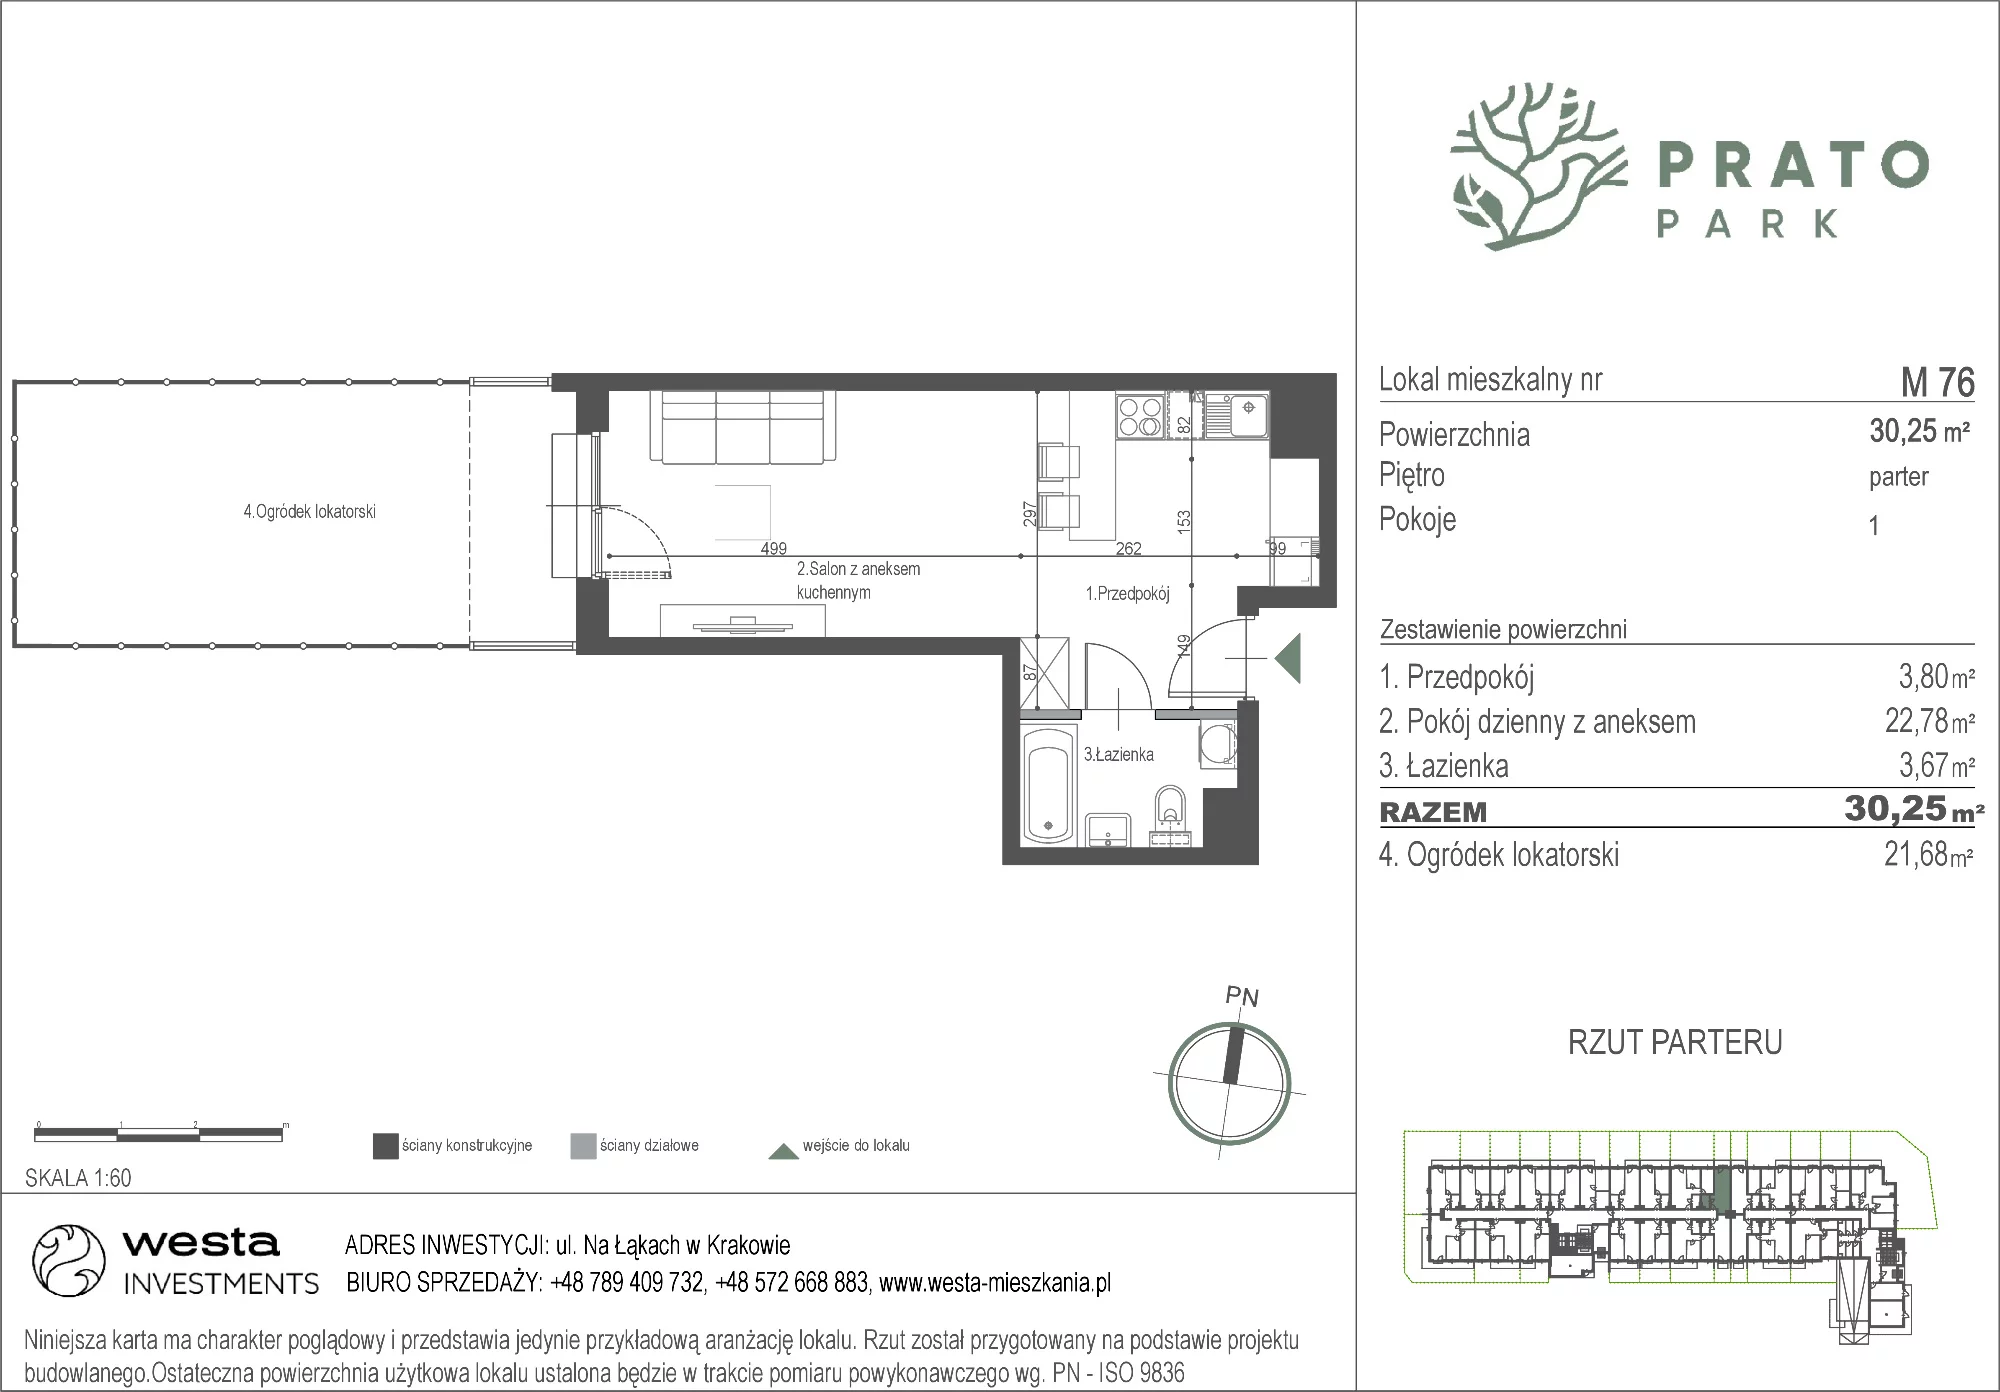 Mieszkanie 30,25 m², parter, oferta nr M76, Prato Park, Kraków, Czyżyny, ul. Na Łąkach